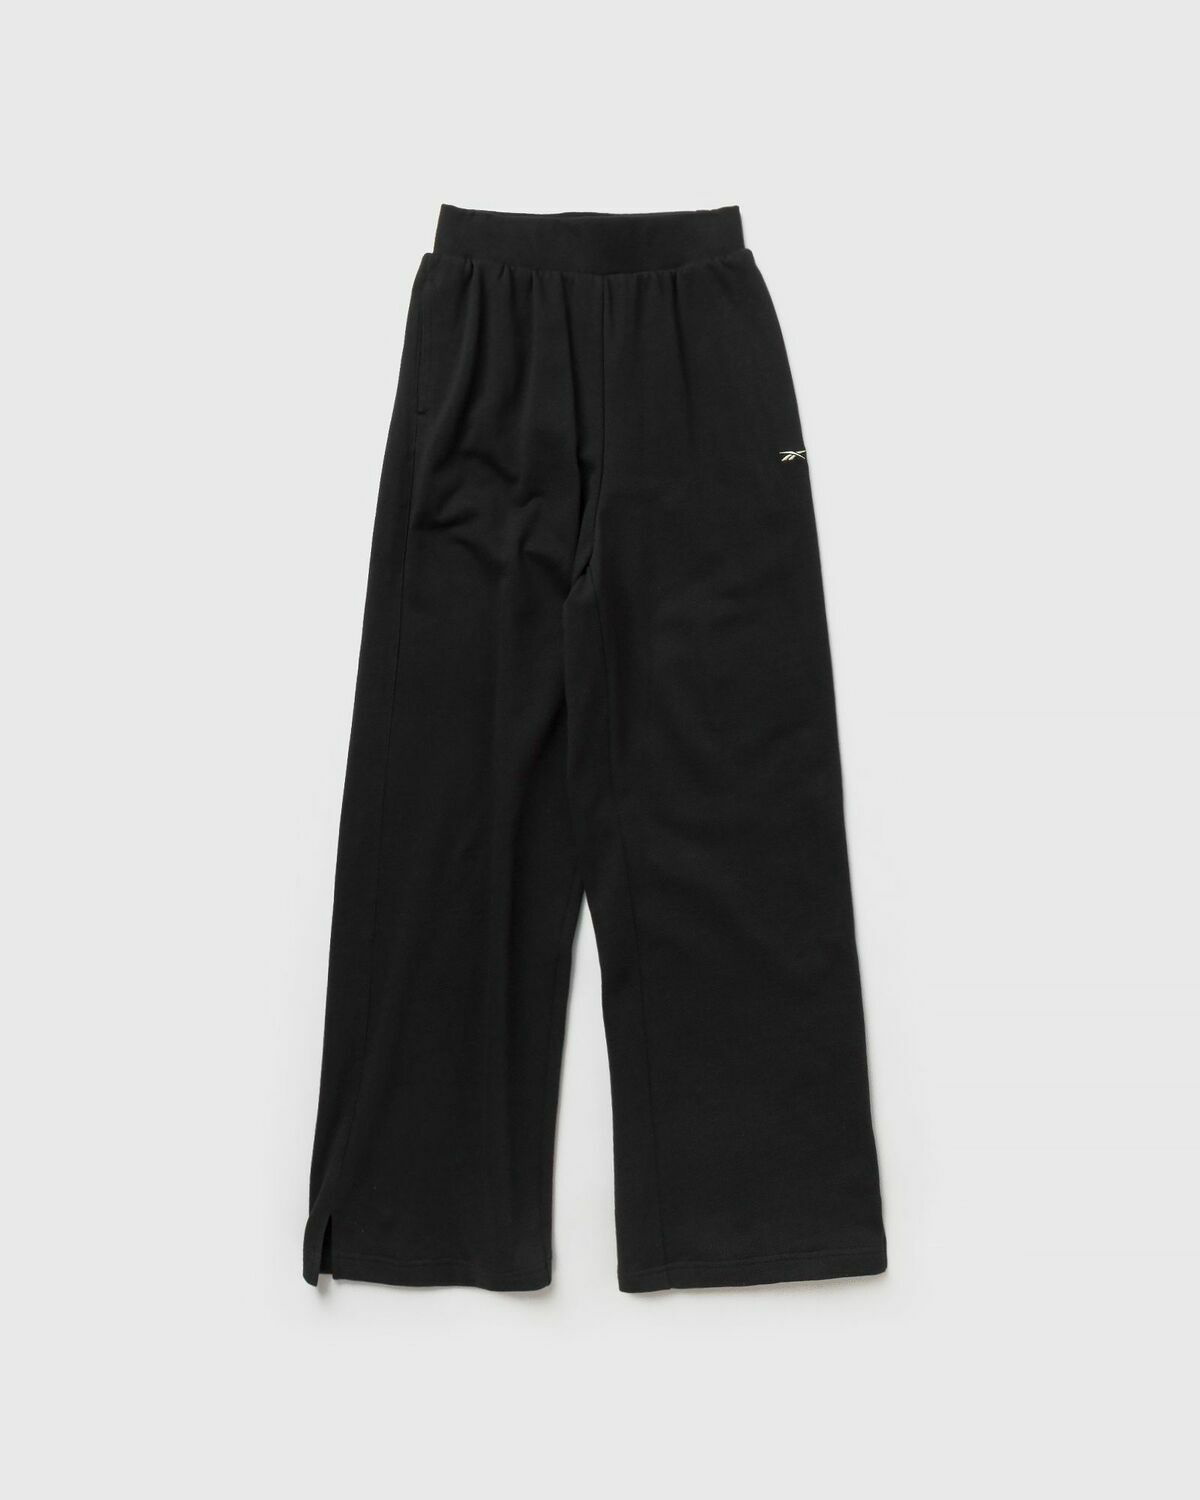 Reebok Classics French Terry Pants Women's Black Sportswear Sweatpants  Bottoms